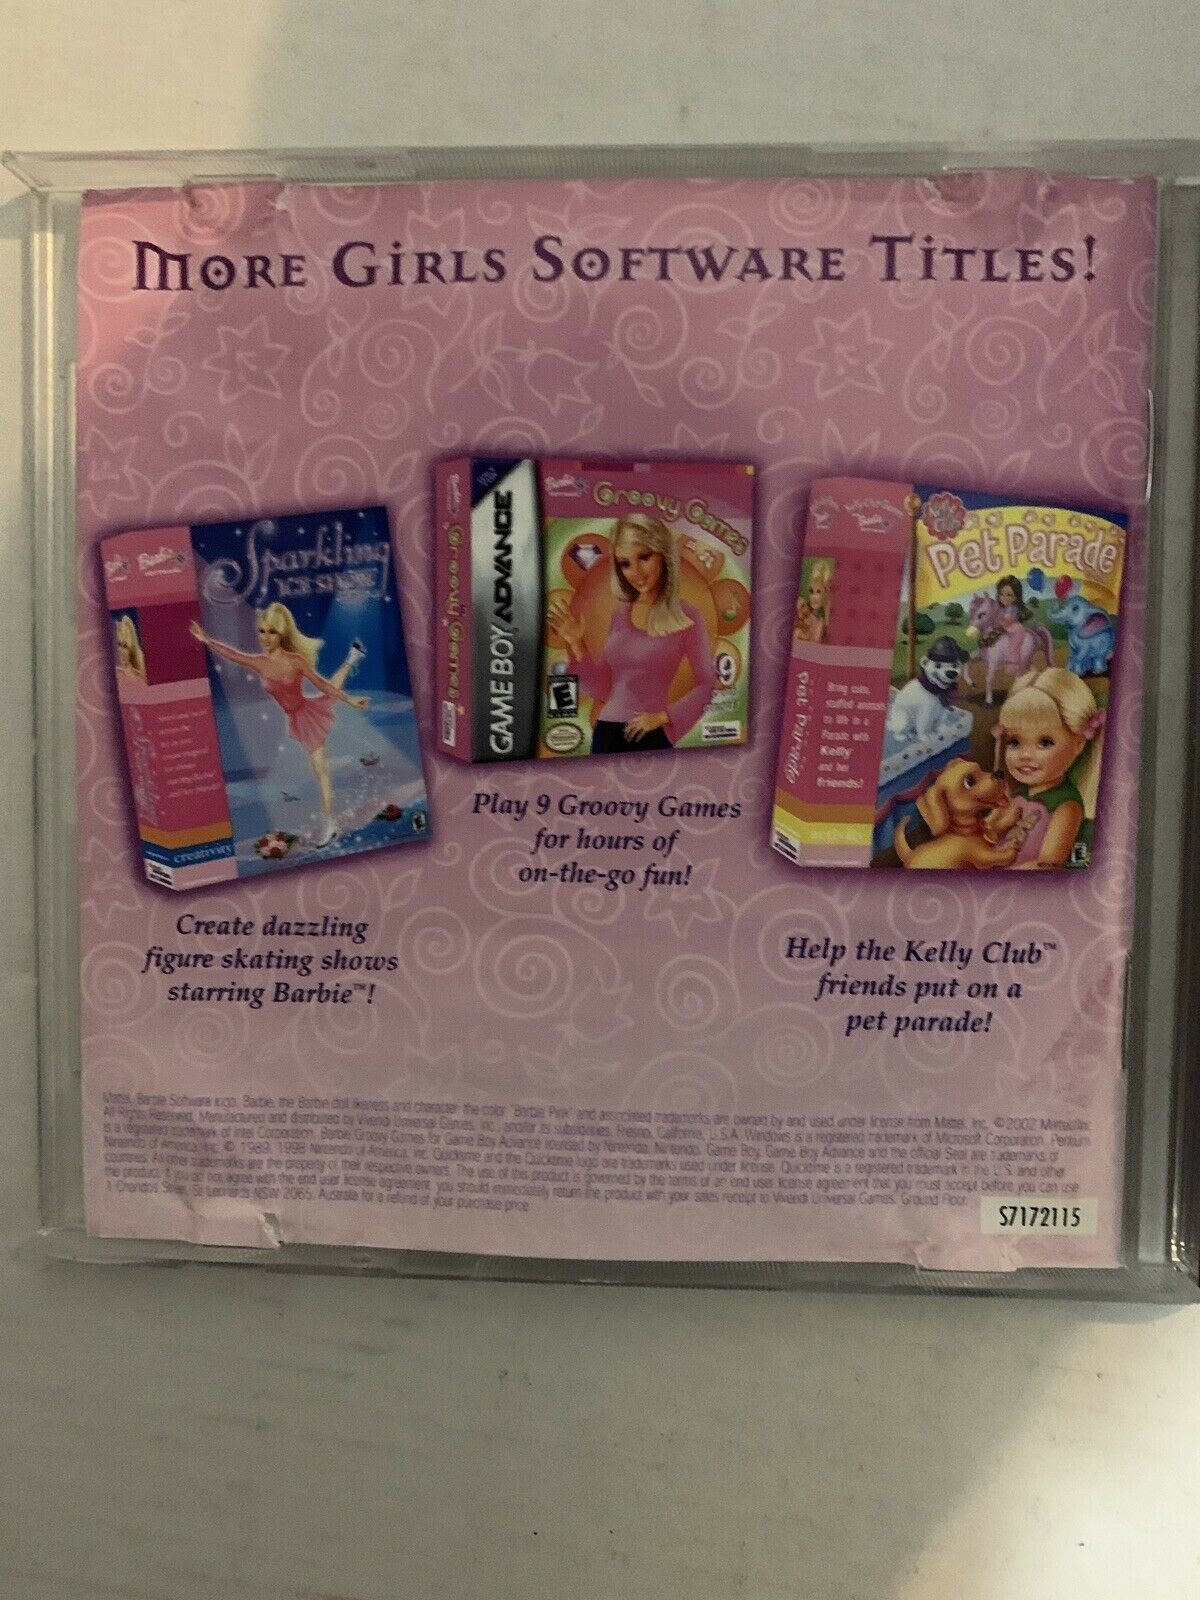 Barbie as Rapunzel: A Creative Adventure - Old Games Download